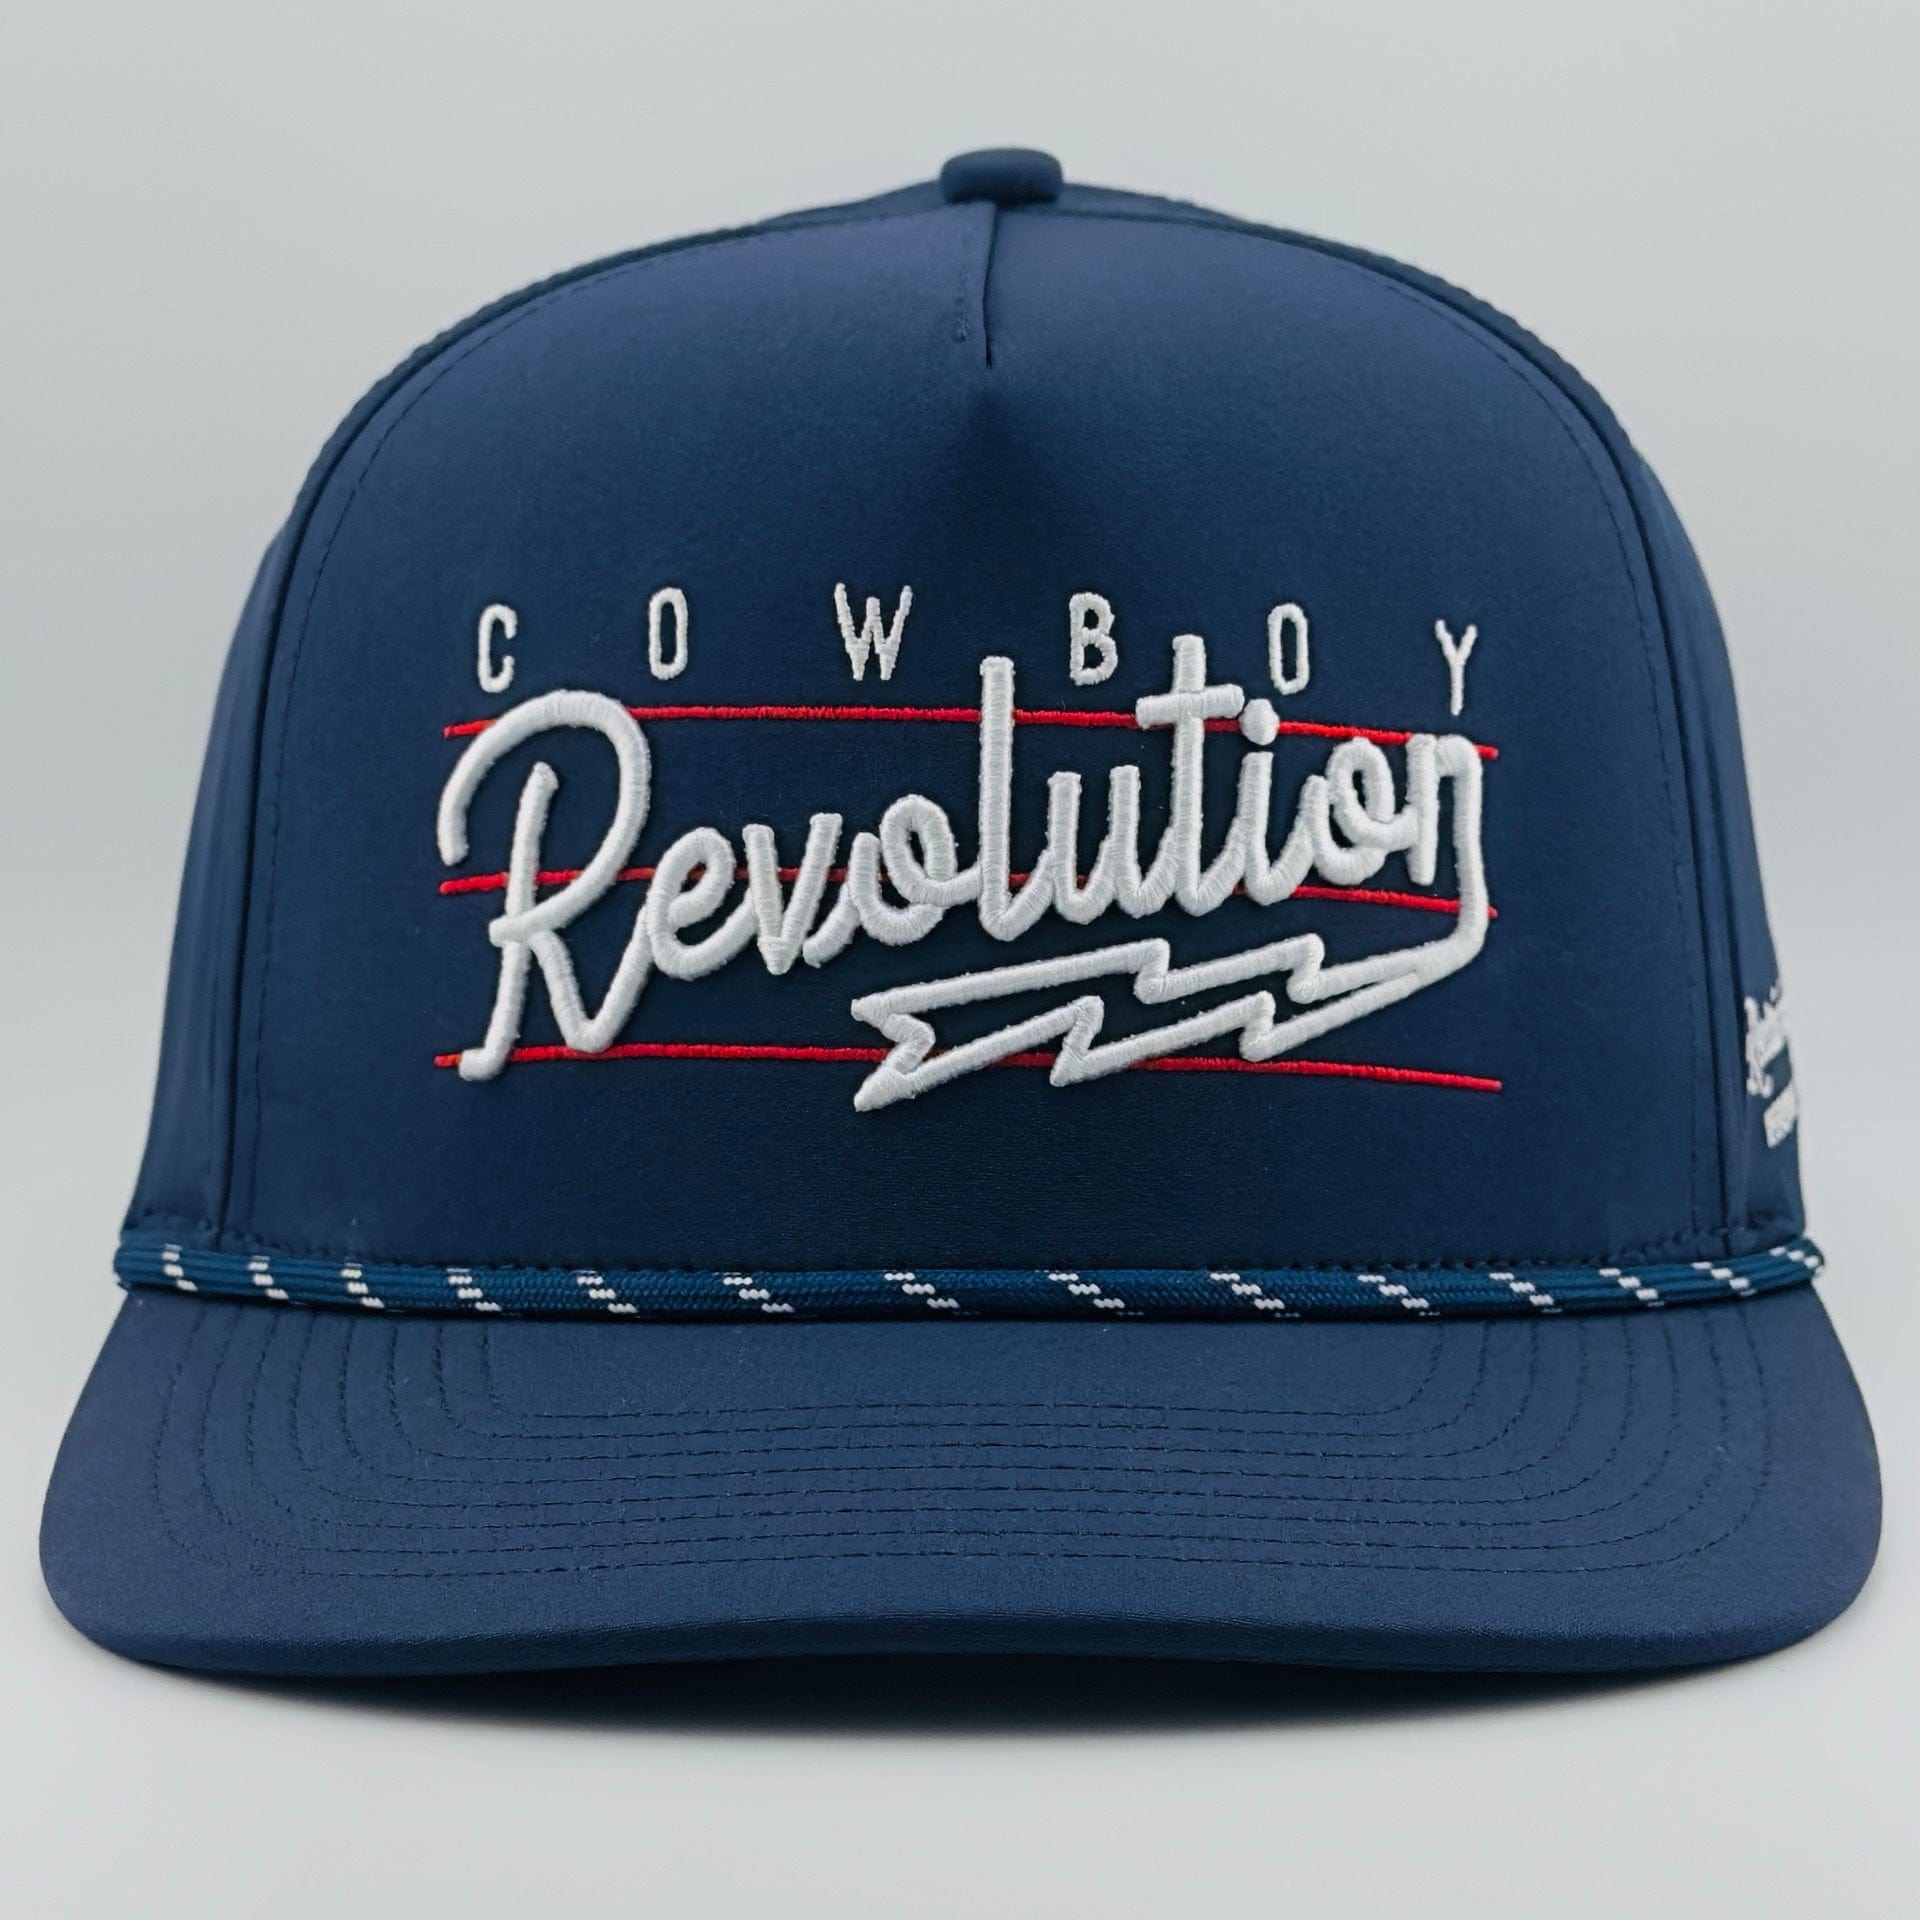 Cowboy Revolution Apparel Co. Hats One Size Fits Most “Lightning" Navy Blue - Cowboy Revolution 5-panel Performance Hat